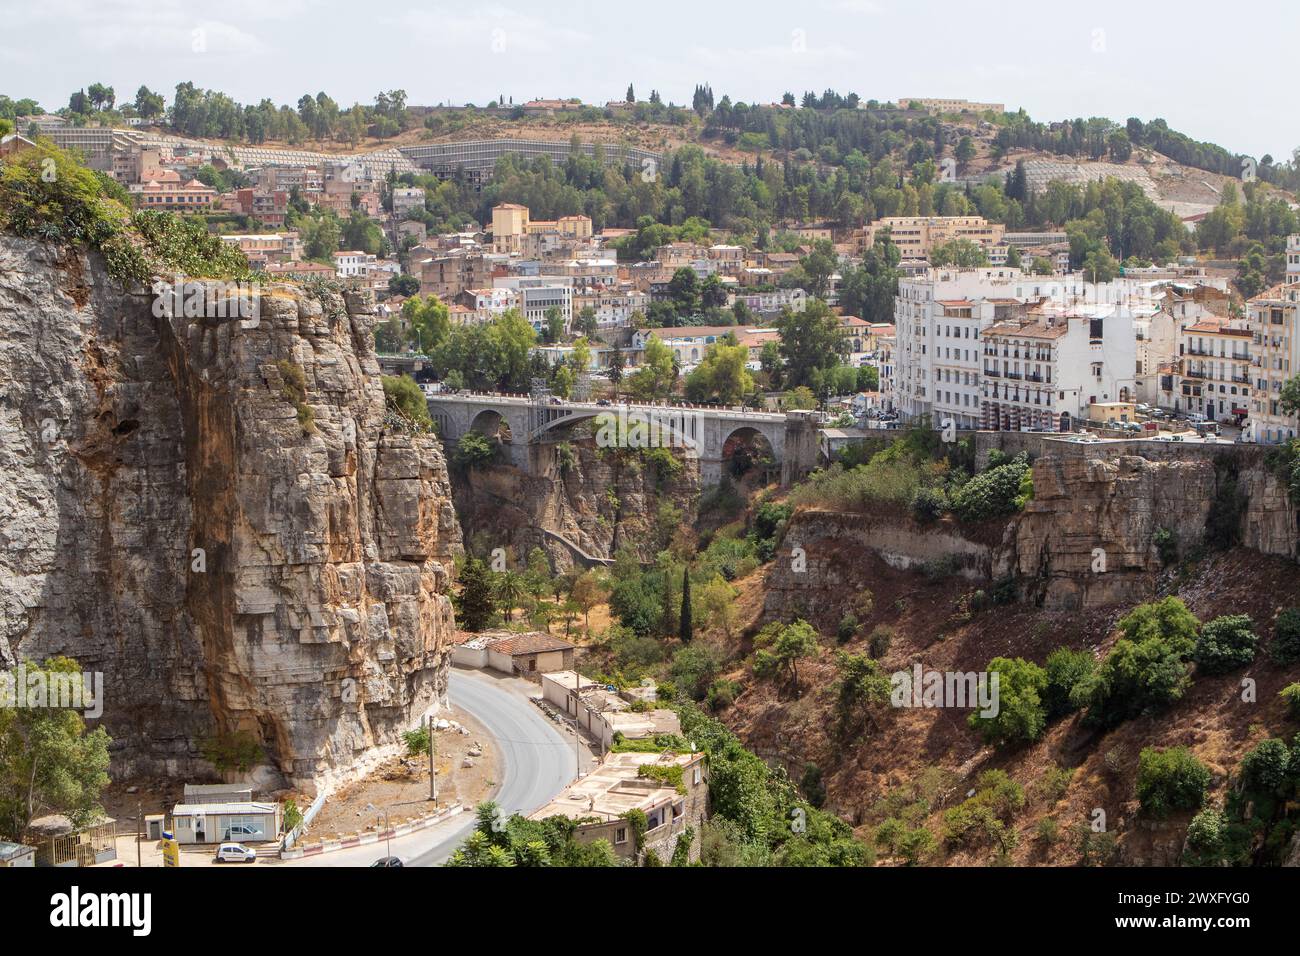 Constantine city historic center bridges and historical monuments Algeria Stock Photo